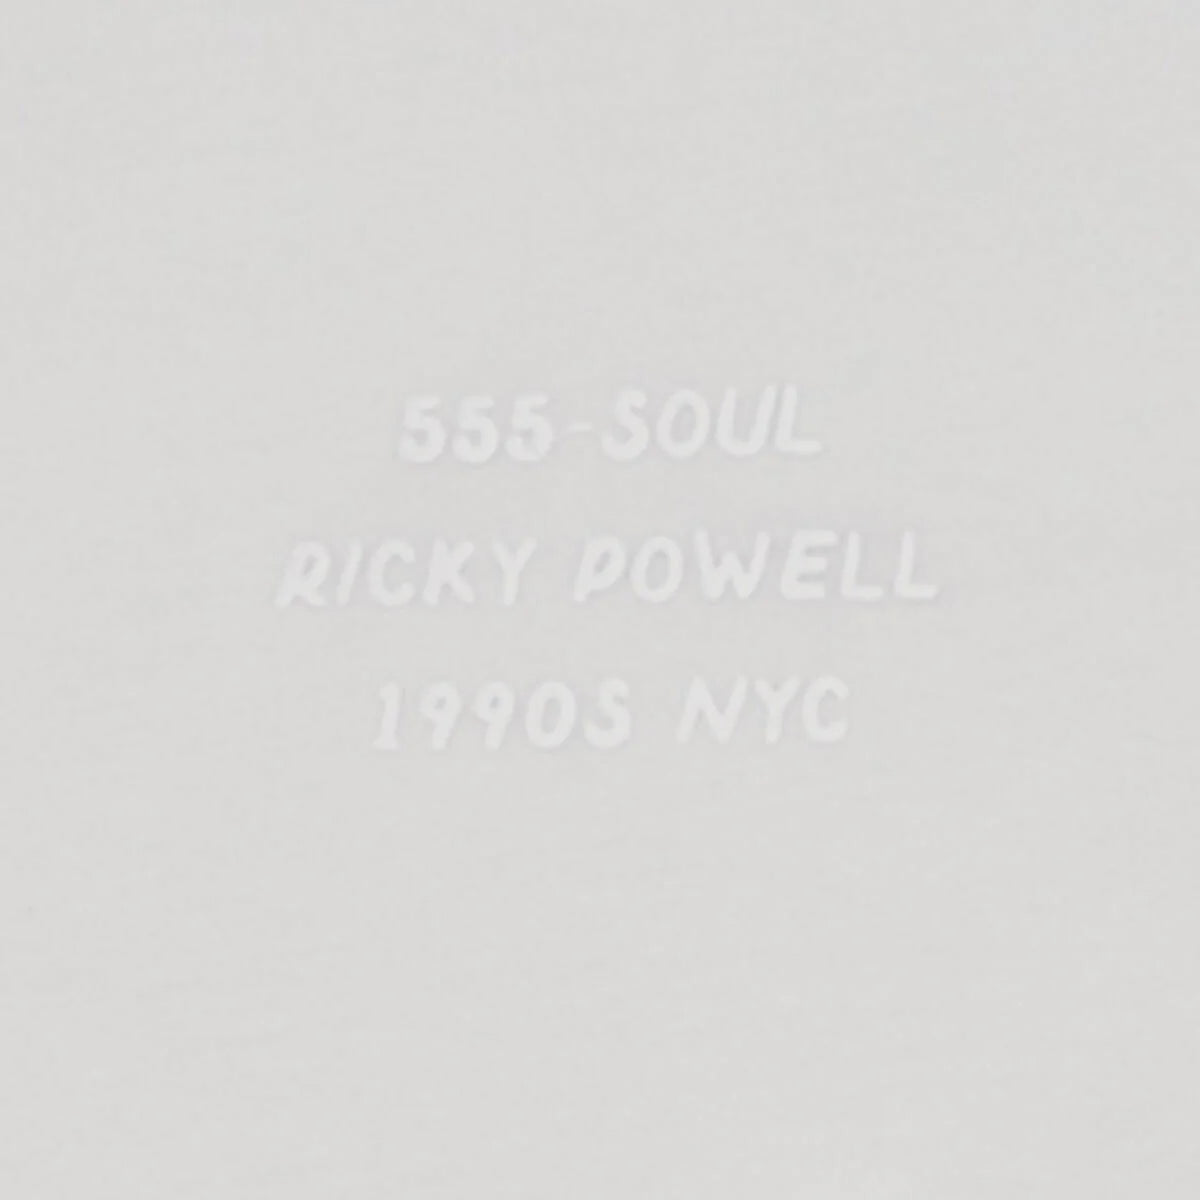 m tops - TRIPLE 5 SOUL - Ricky Powell x 555 Soul T-Shirt - PLENTY